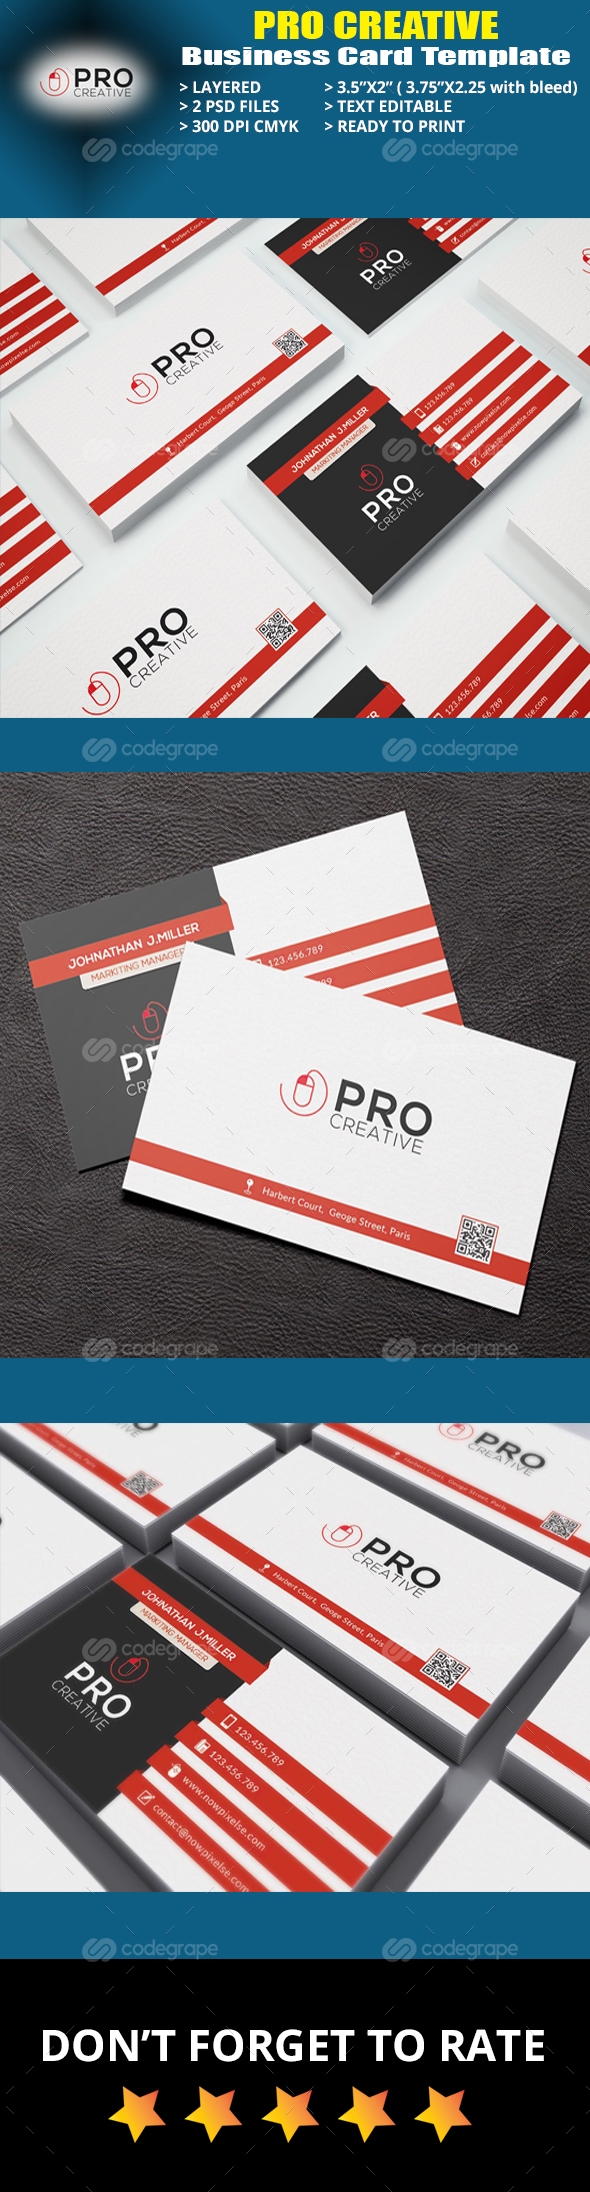 Pro Creative Business Card